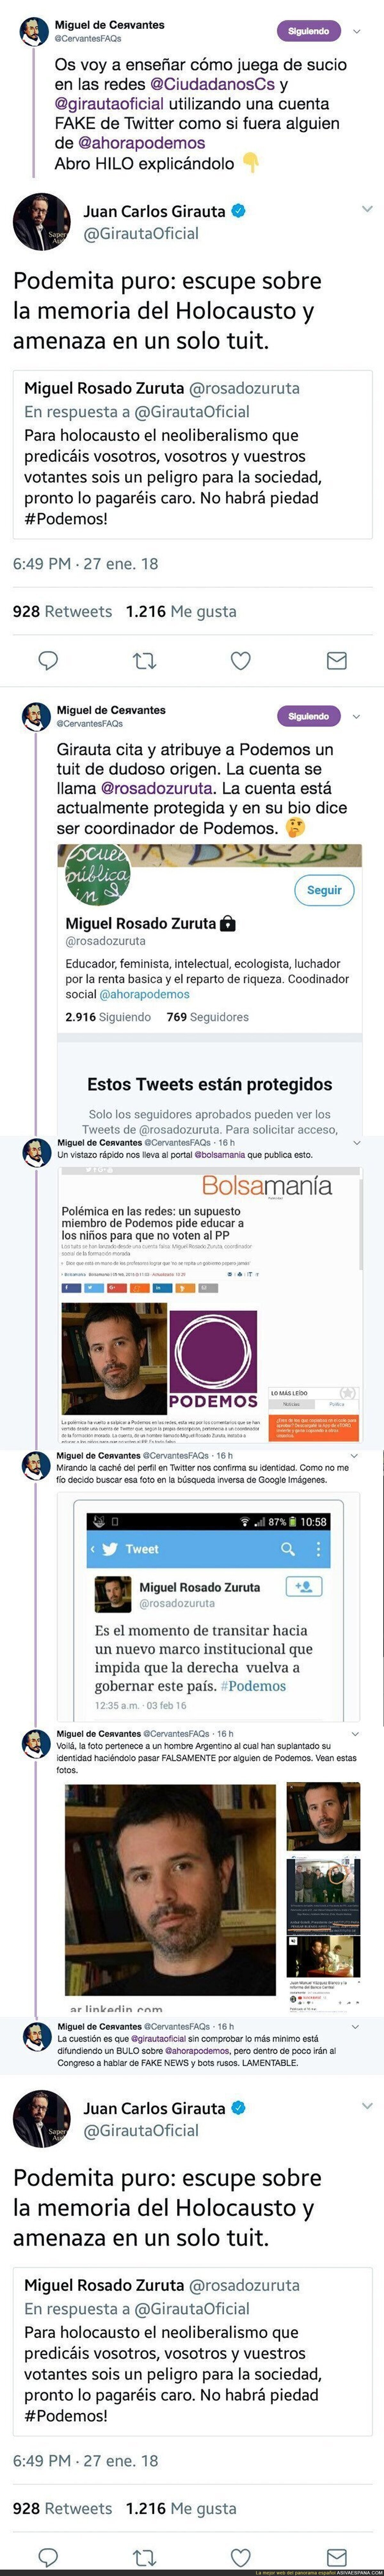 Pillan a Juan Carlos Girauta difundiendo mentiras sobre una persona falsa de Podemos